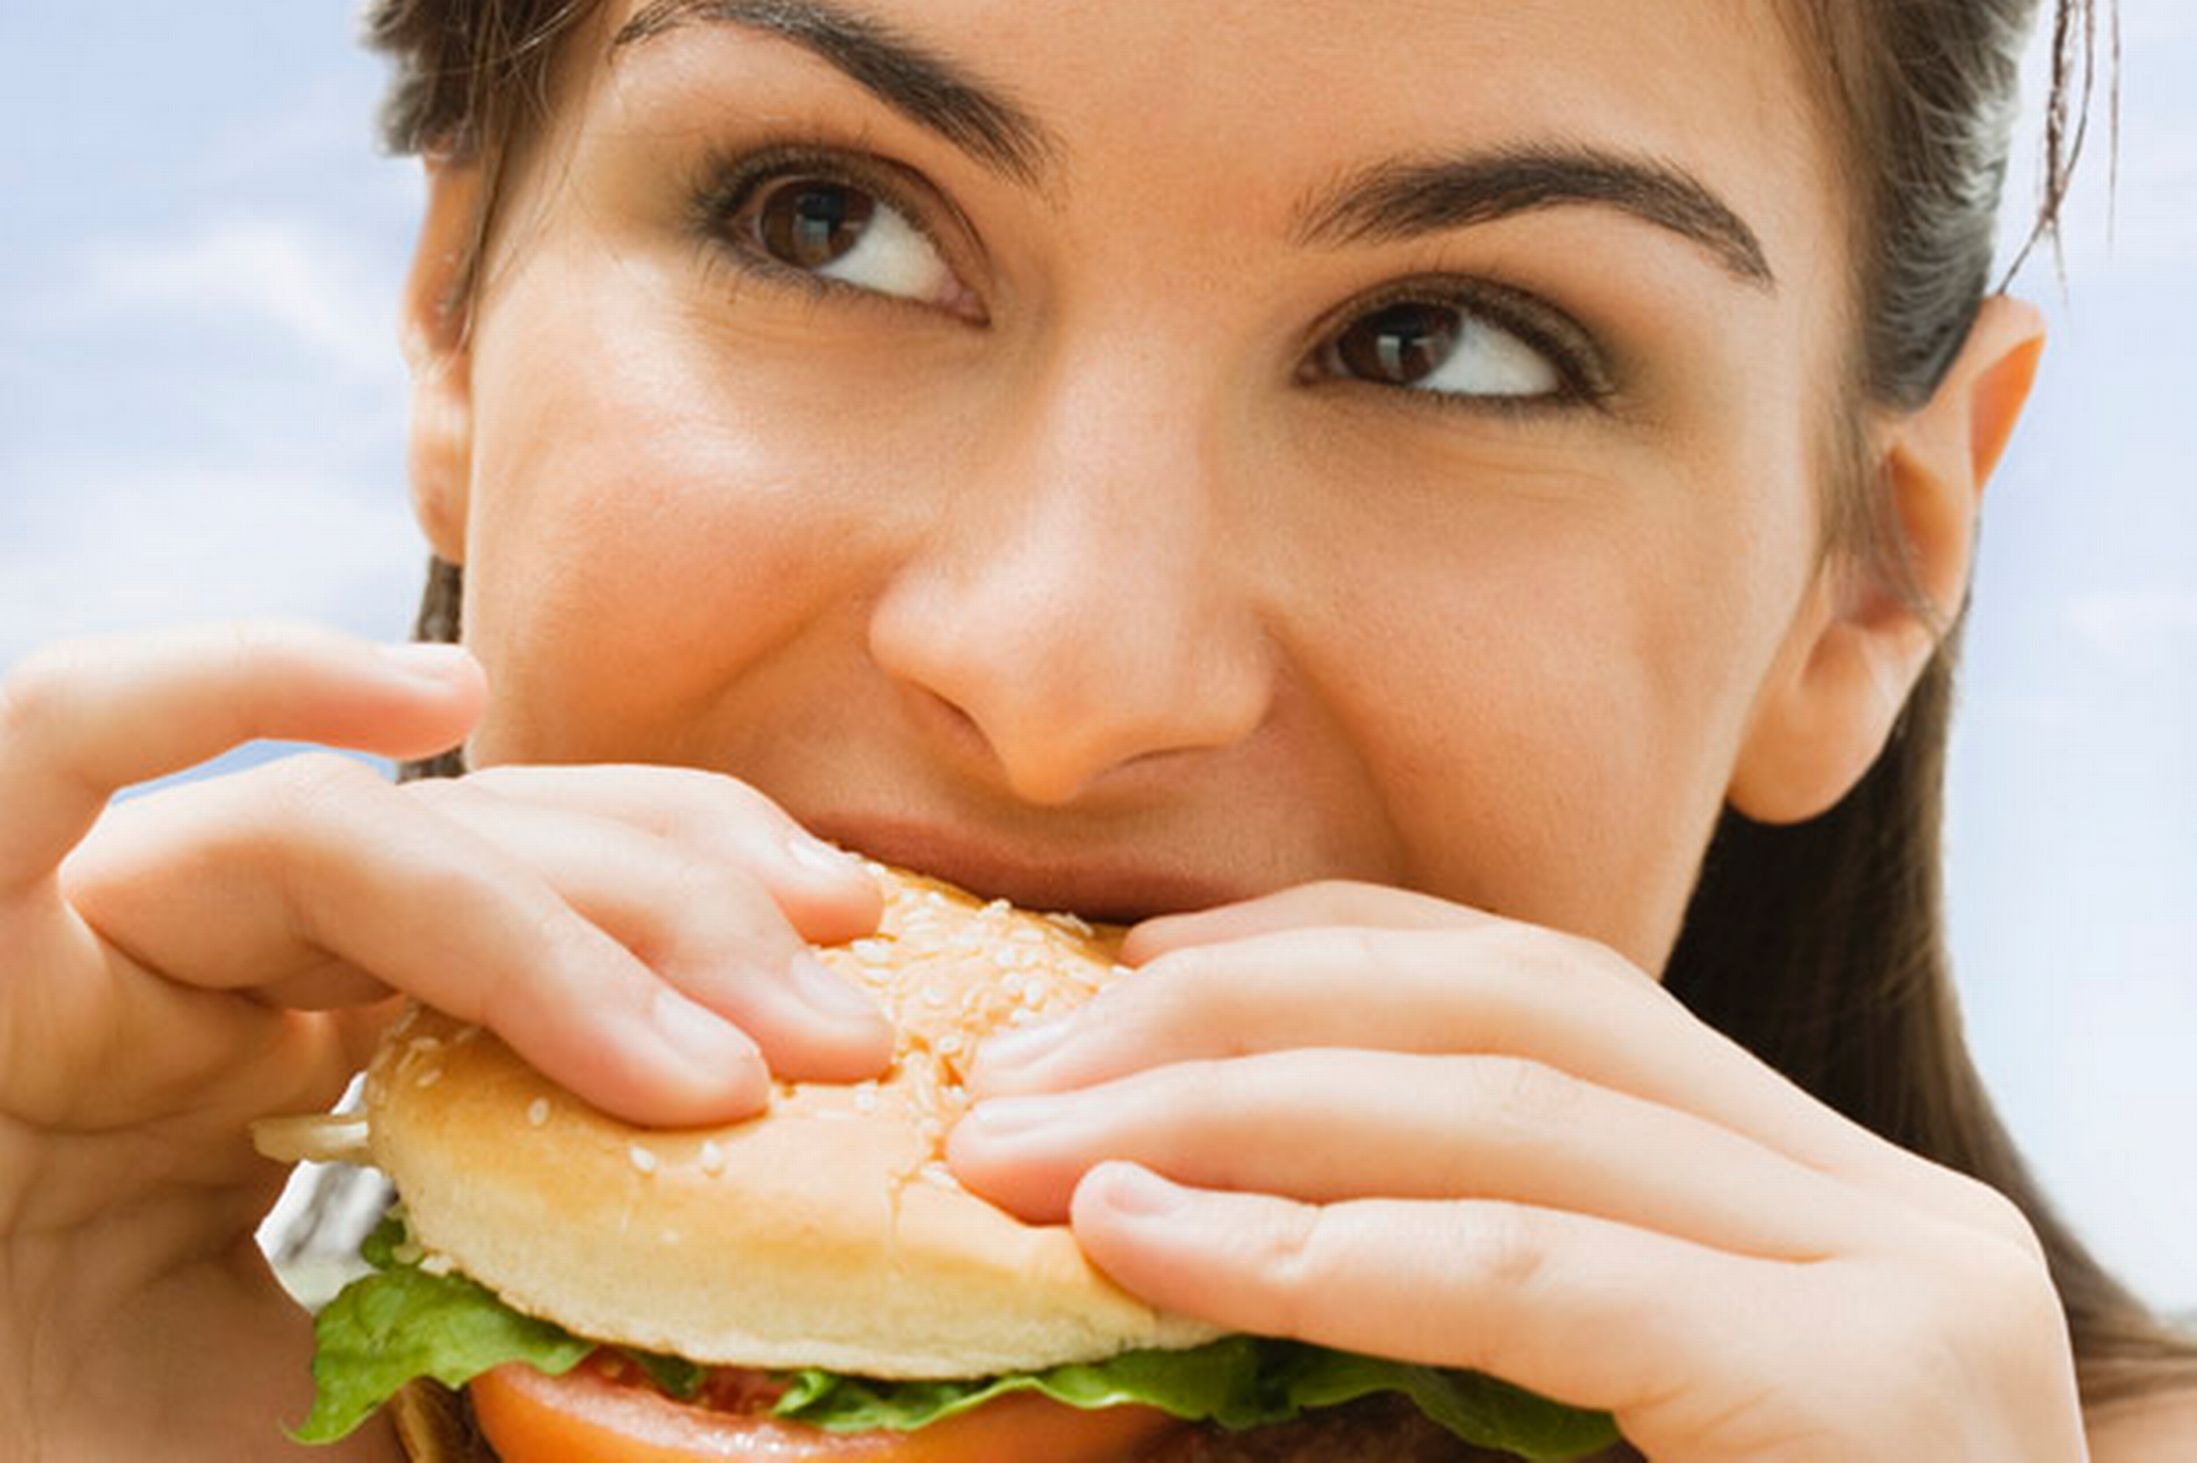 Teenage-girl-eating-a-hamburger-692189